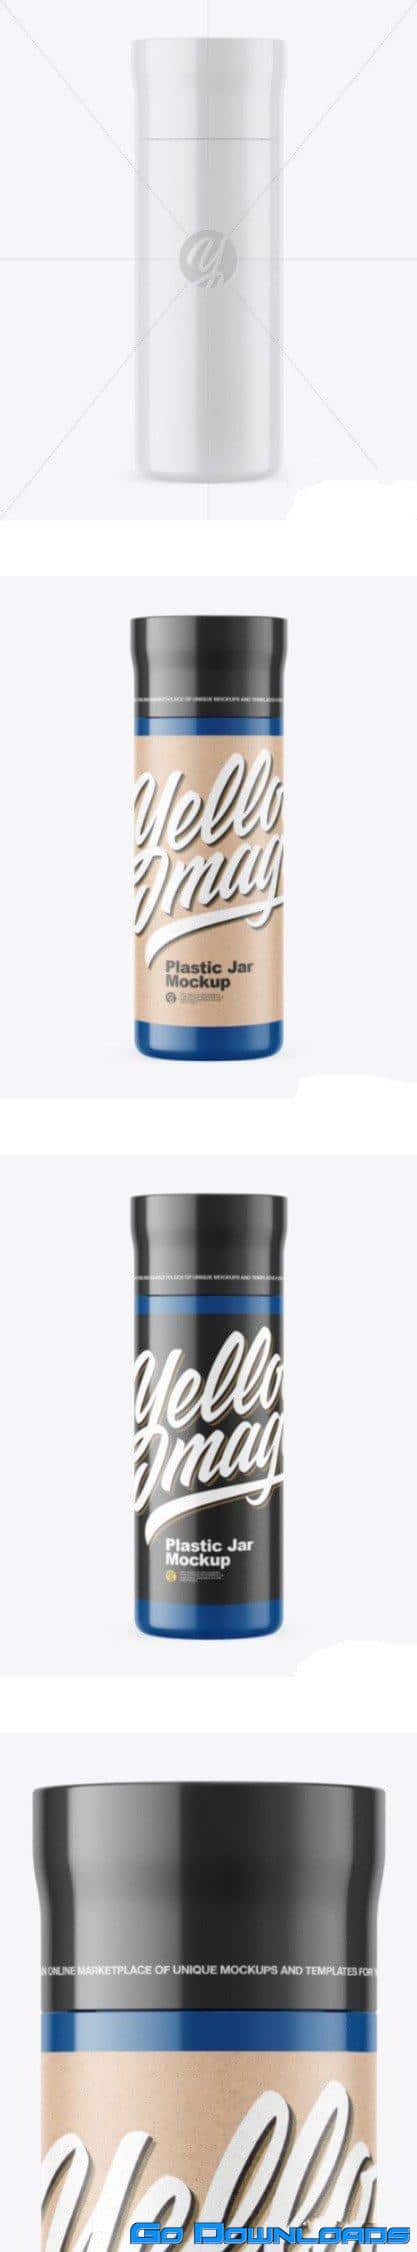 Glossy Plastic Jar Mockup 70504